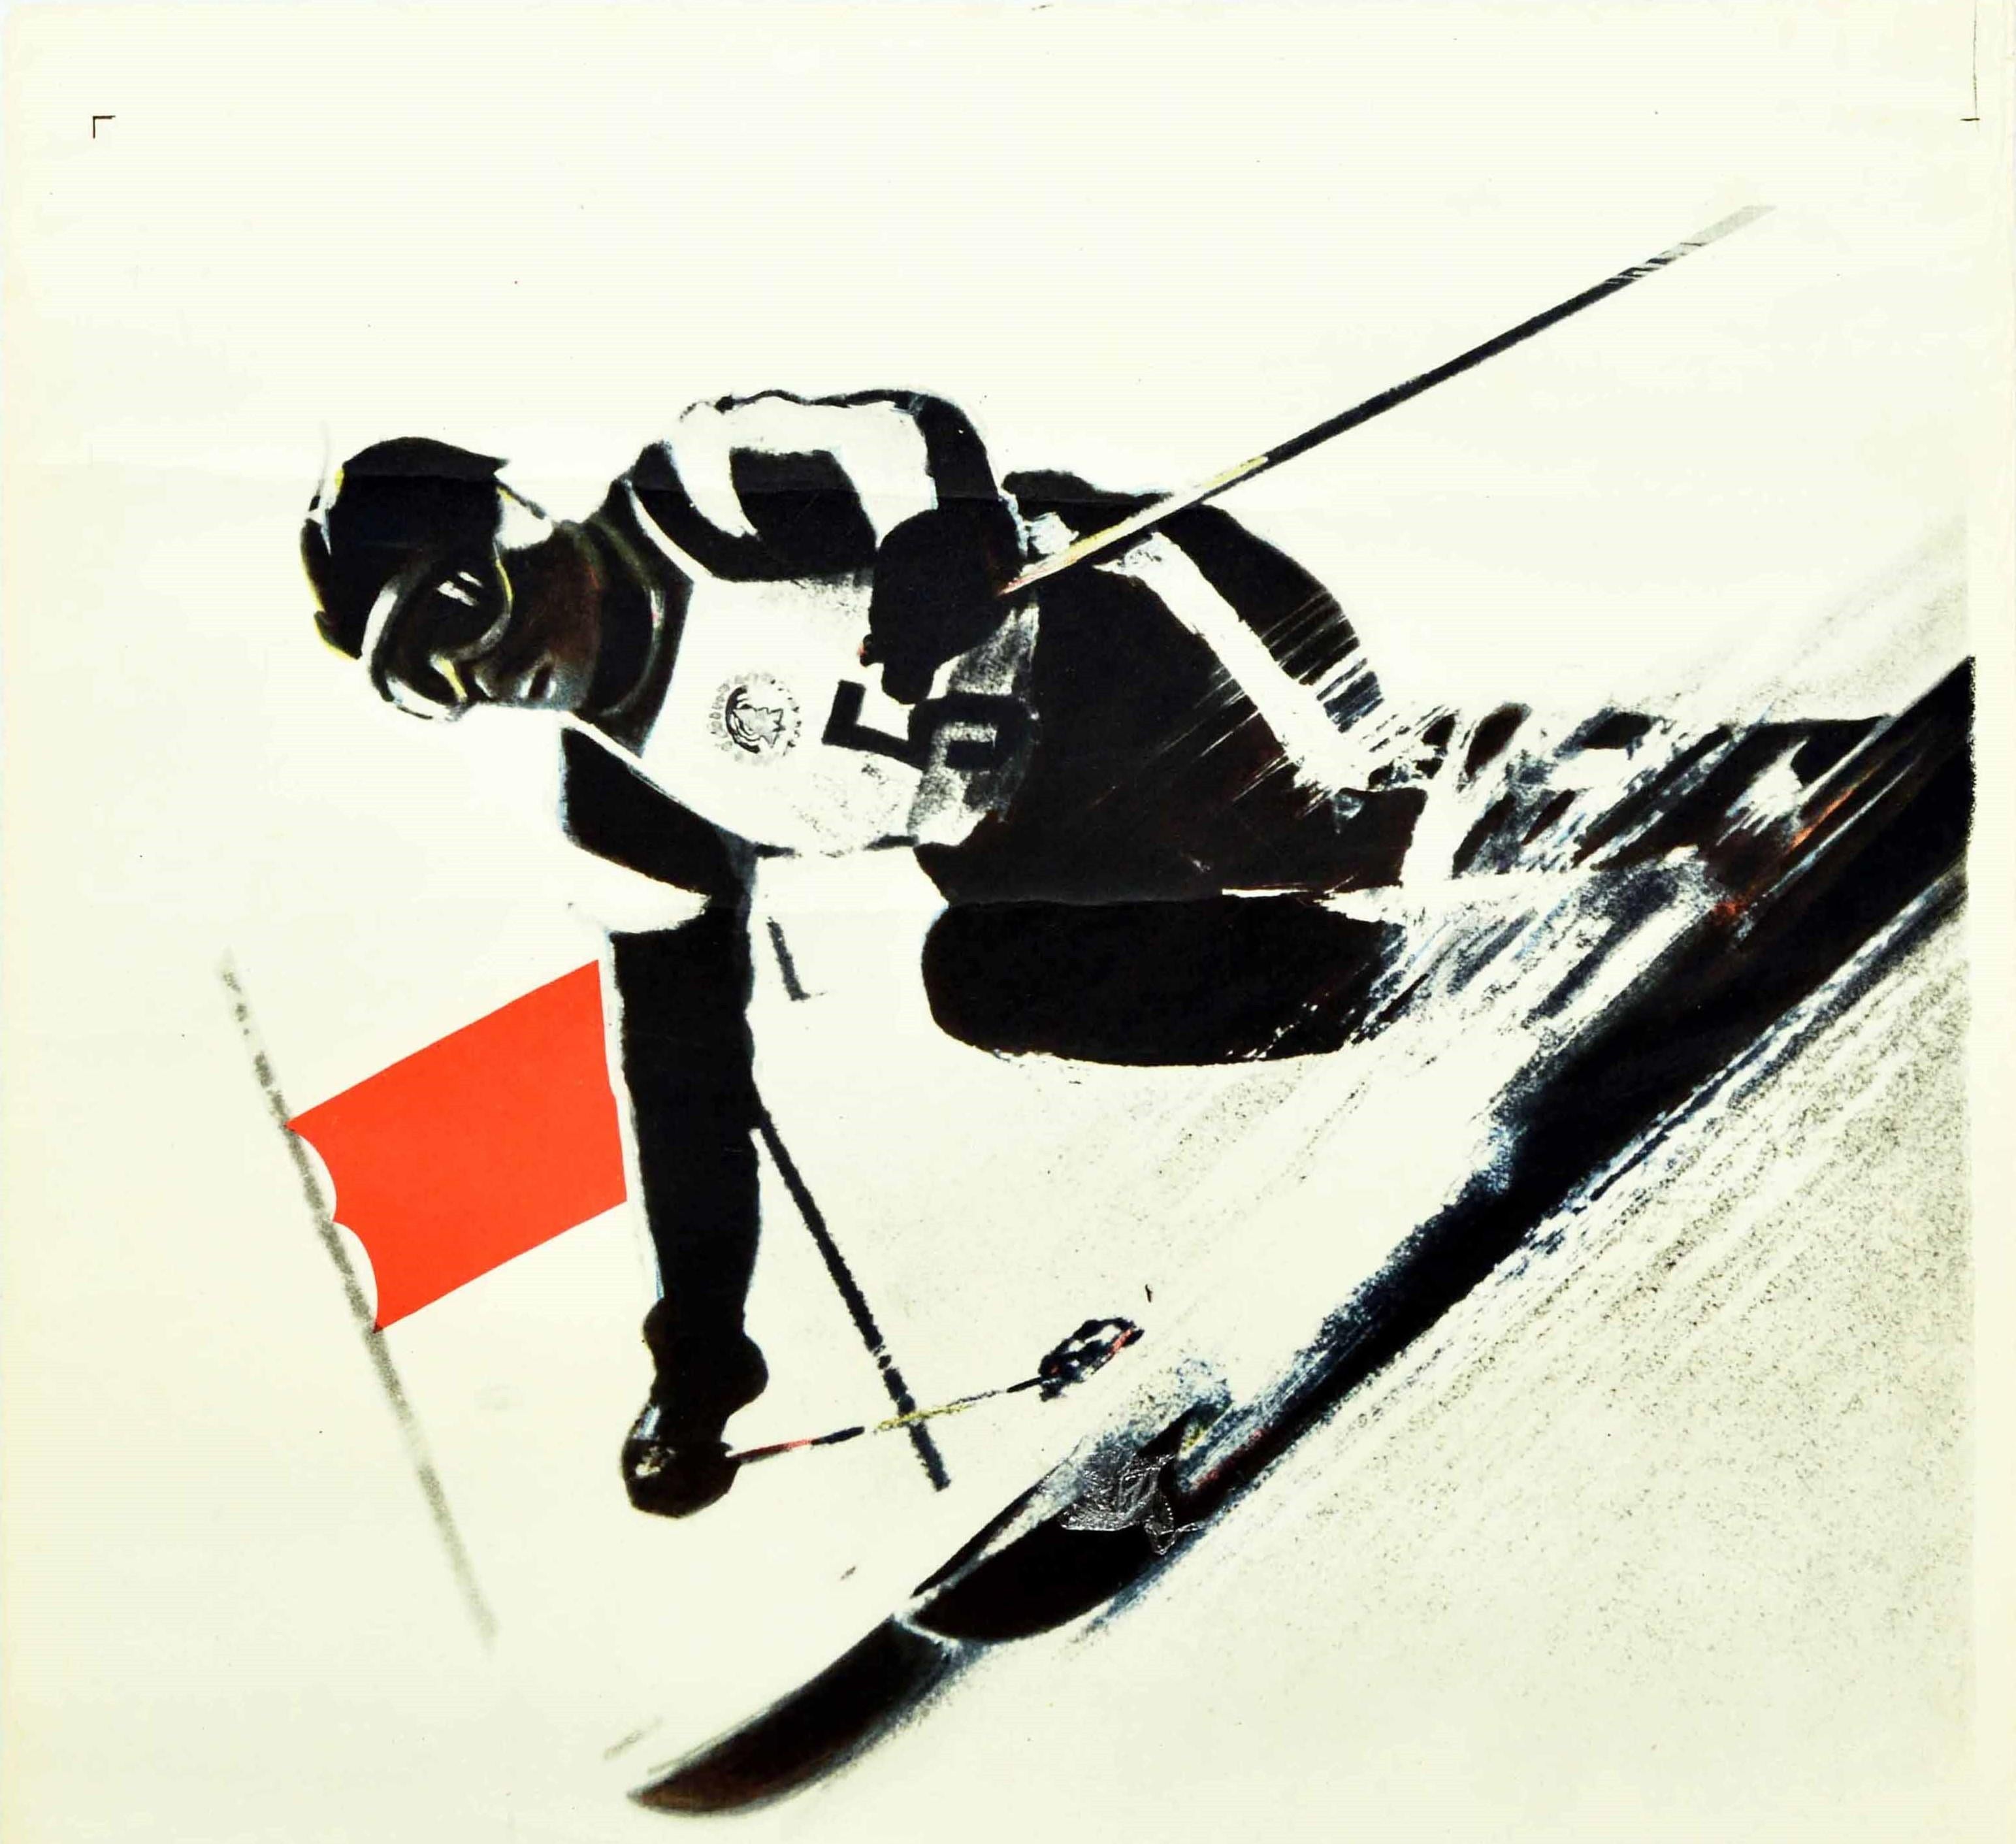 Original Vintage Soviet Winter Sport Poster Downhill Skiing USSR Skier Design - Print by M Manuilov